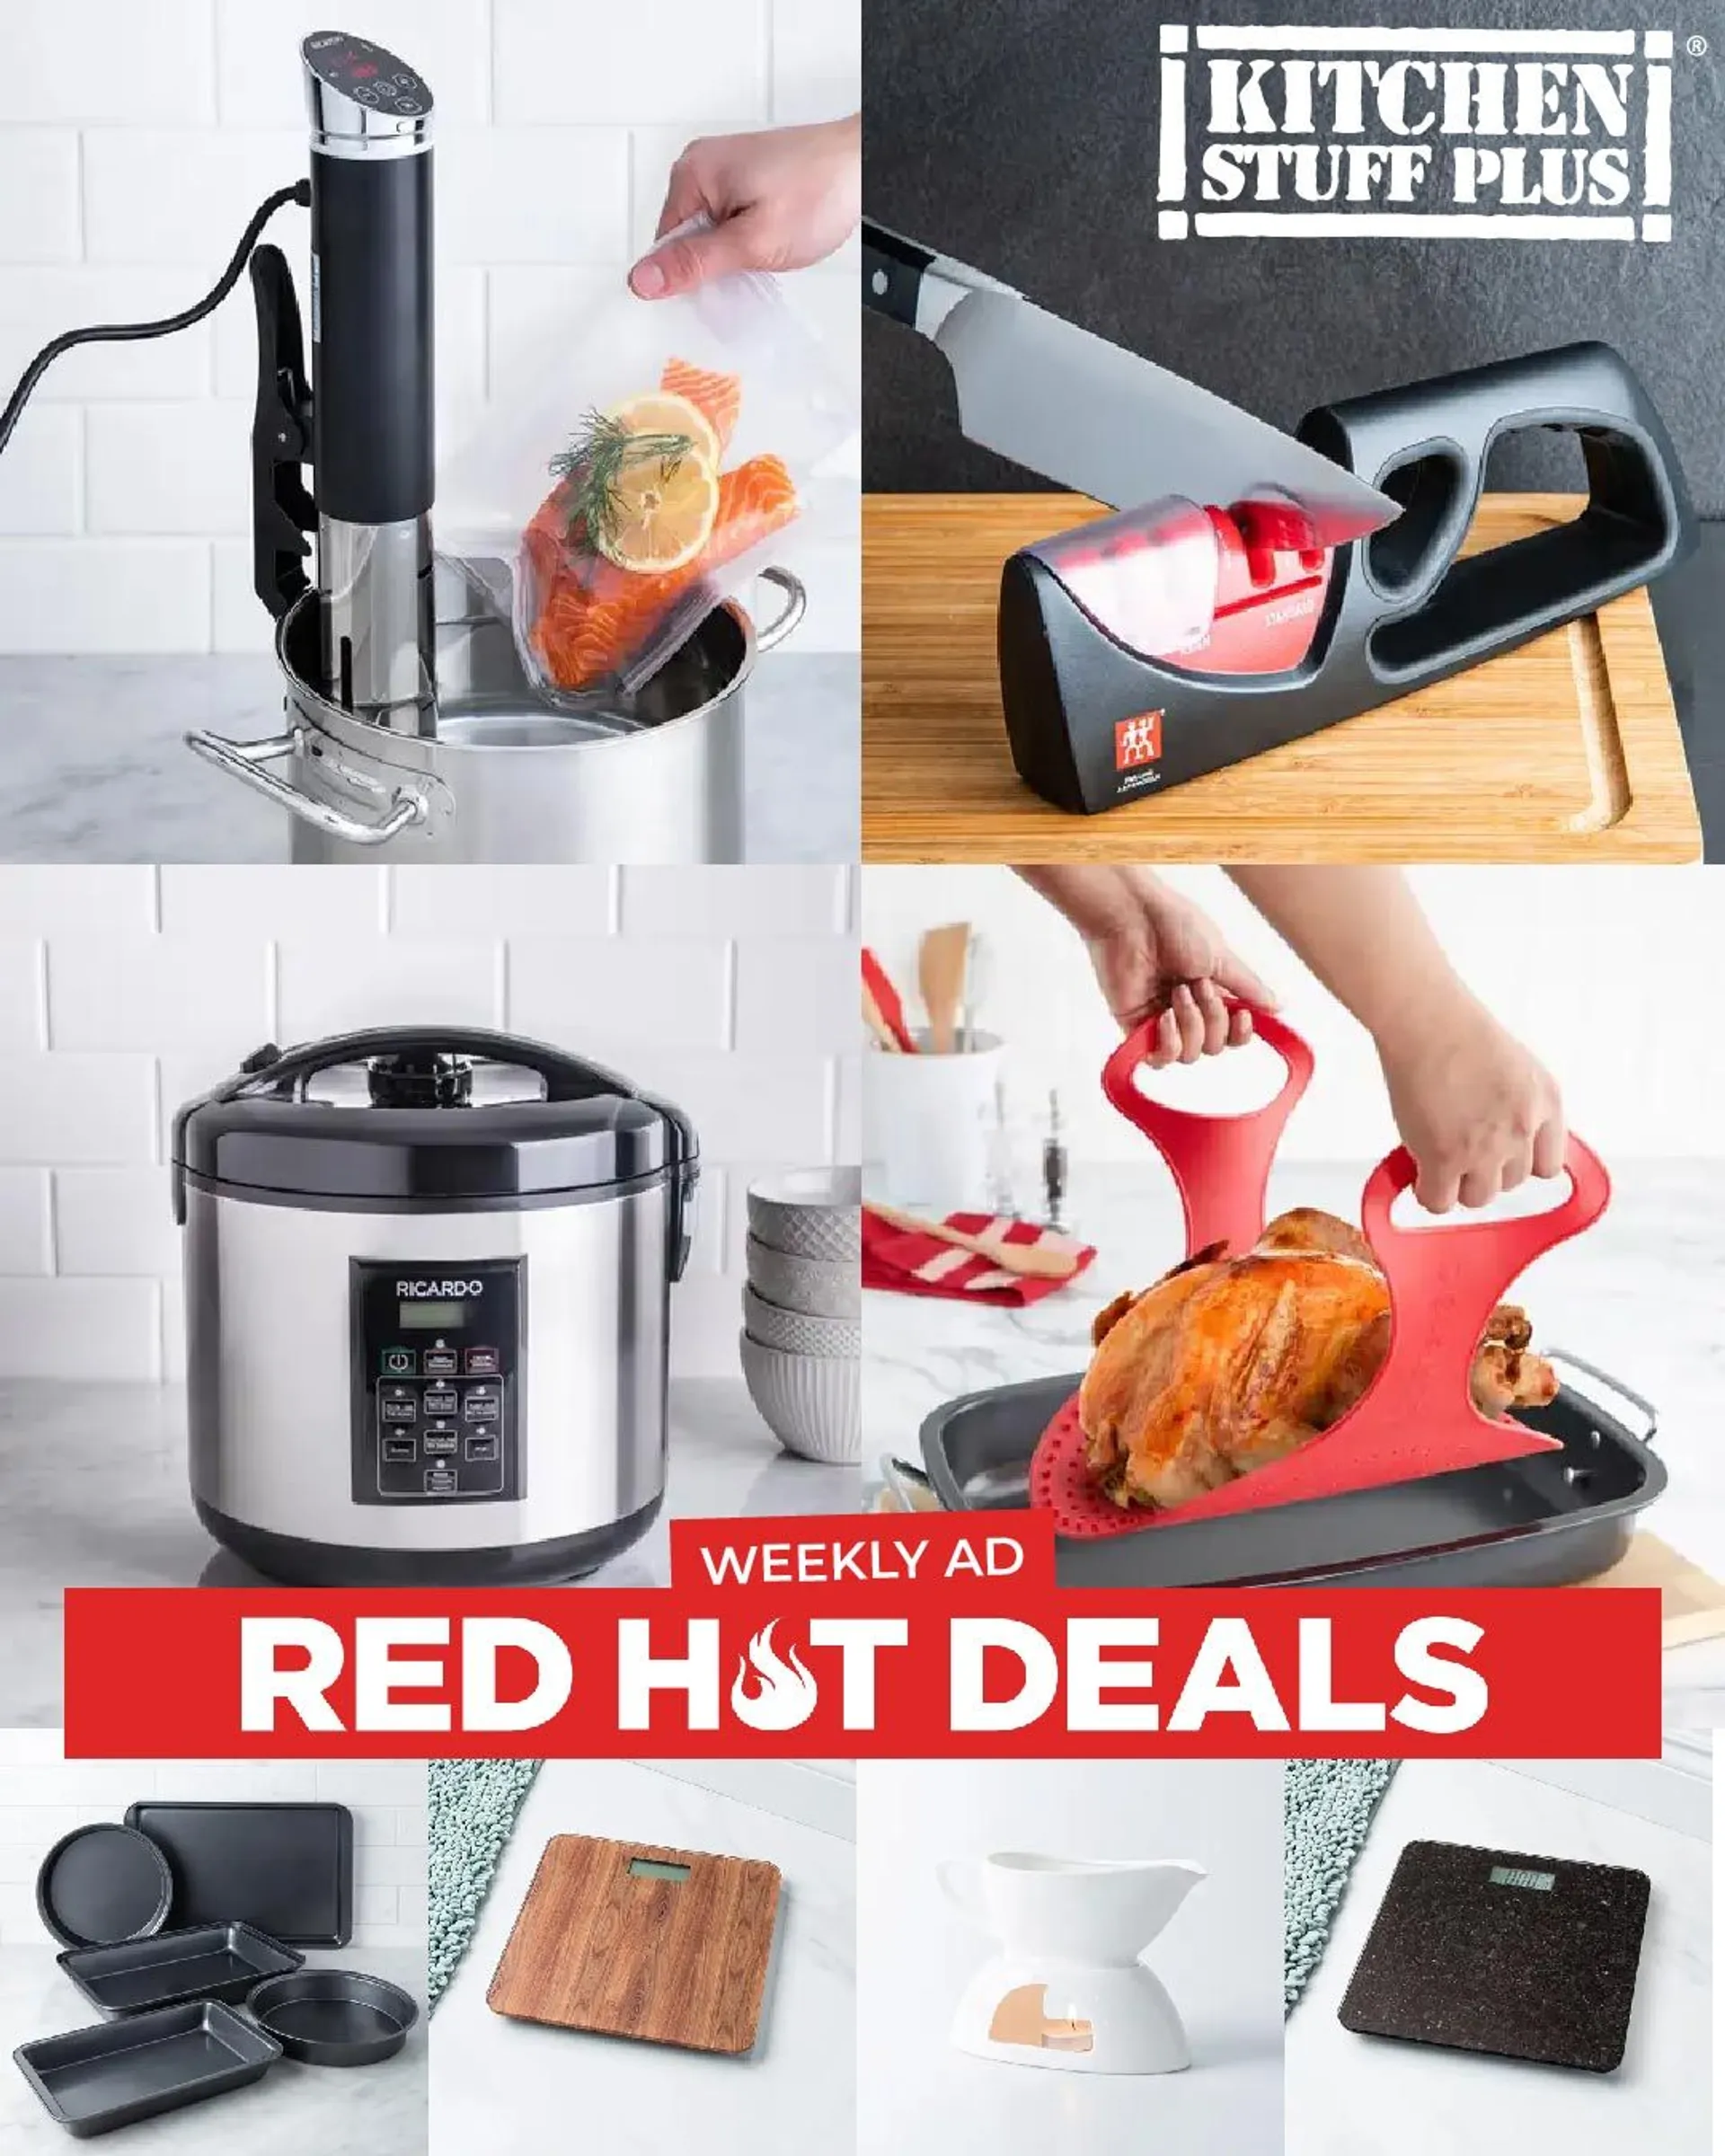 Kitchen Stuff Plus - Hot Deals!